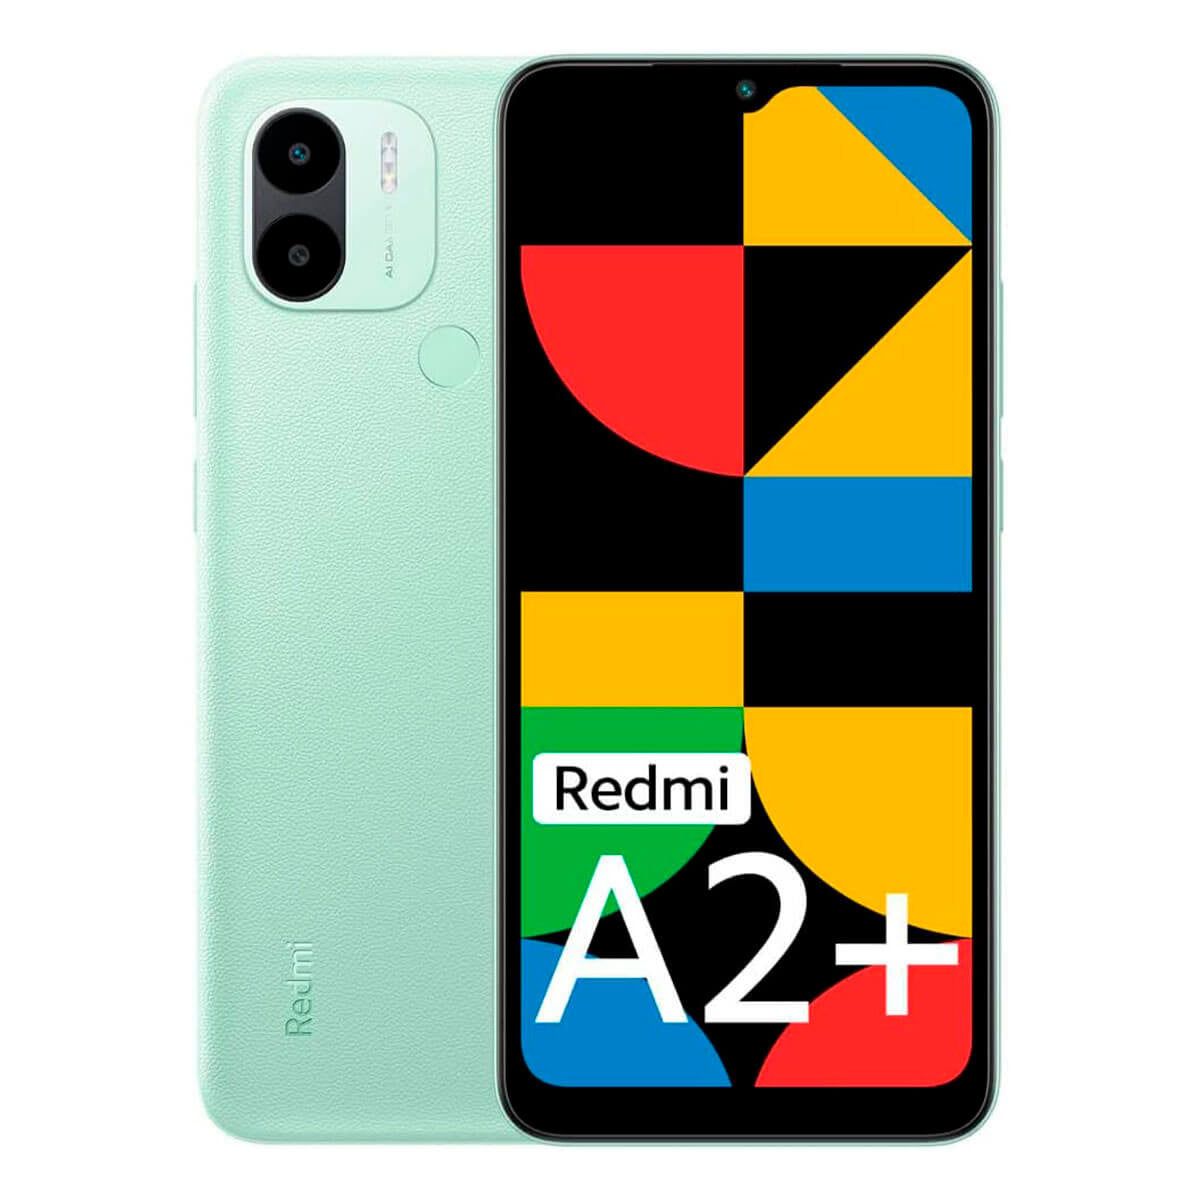 Xiaomi Redmi A2+ 3GB/64GB Verde Mar (Sea Green) Dual SIM 23028RNCAG Smartphone | Xiaomi